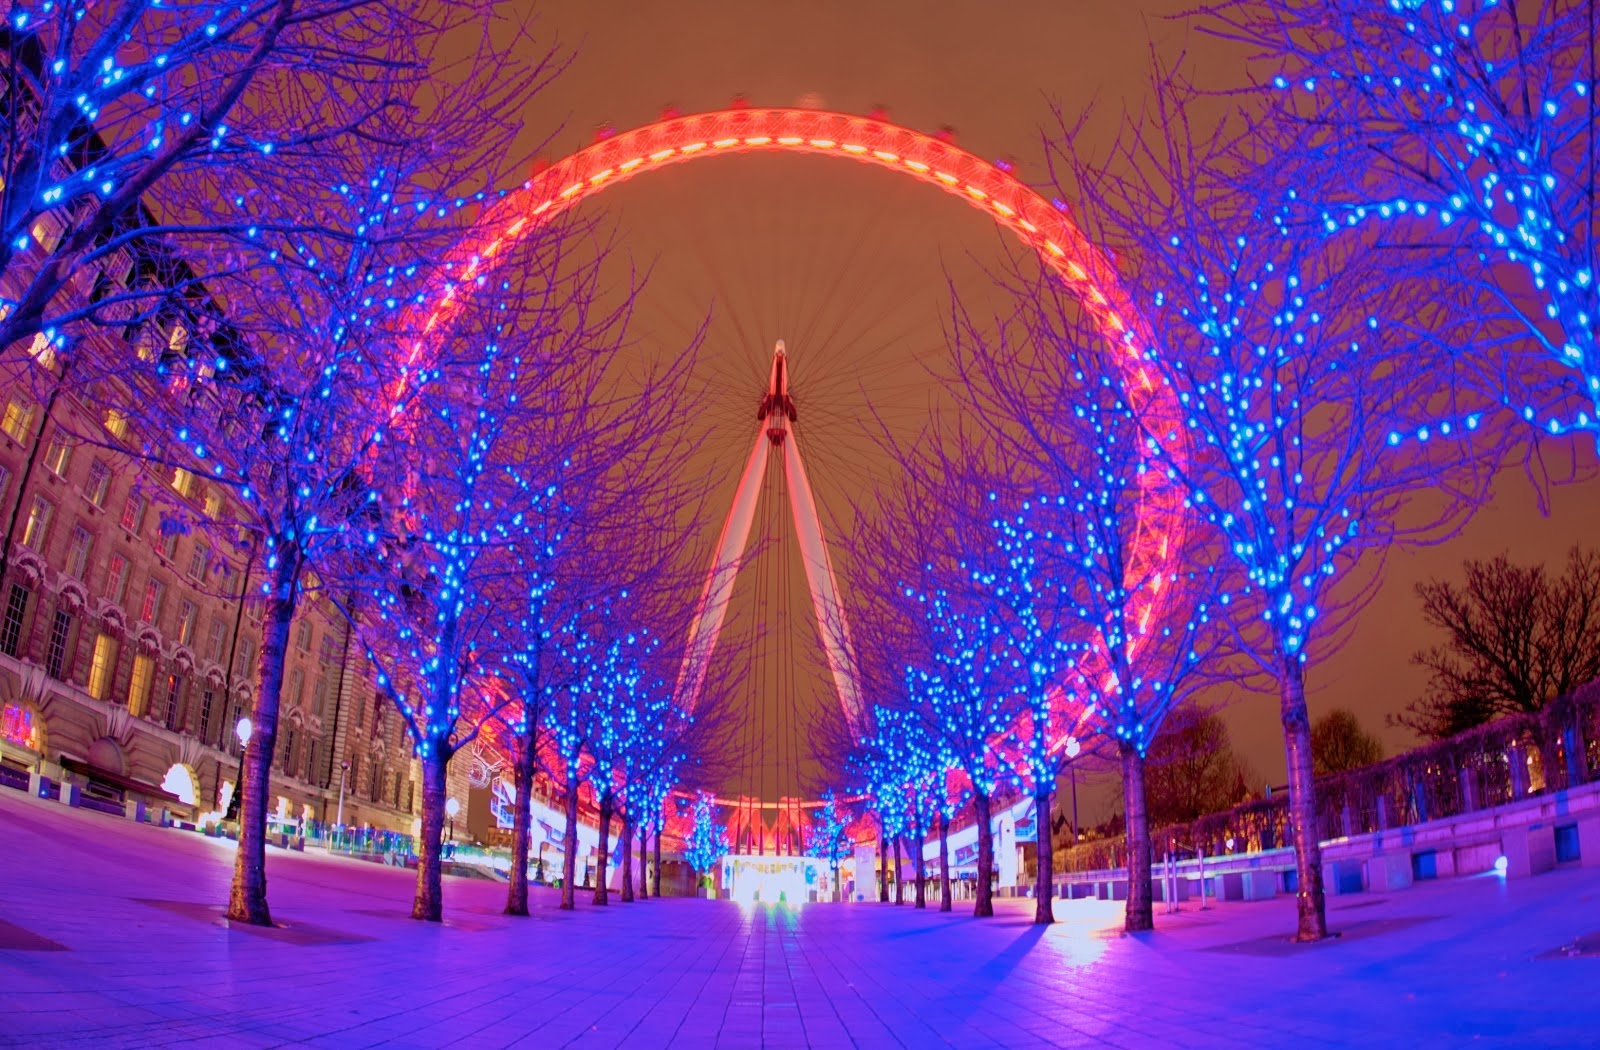 Trip to London Winter Wonderland before Christmas